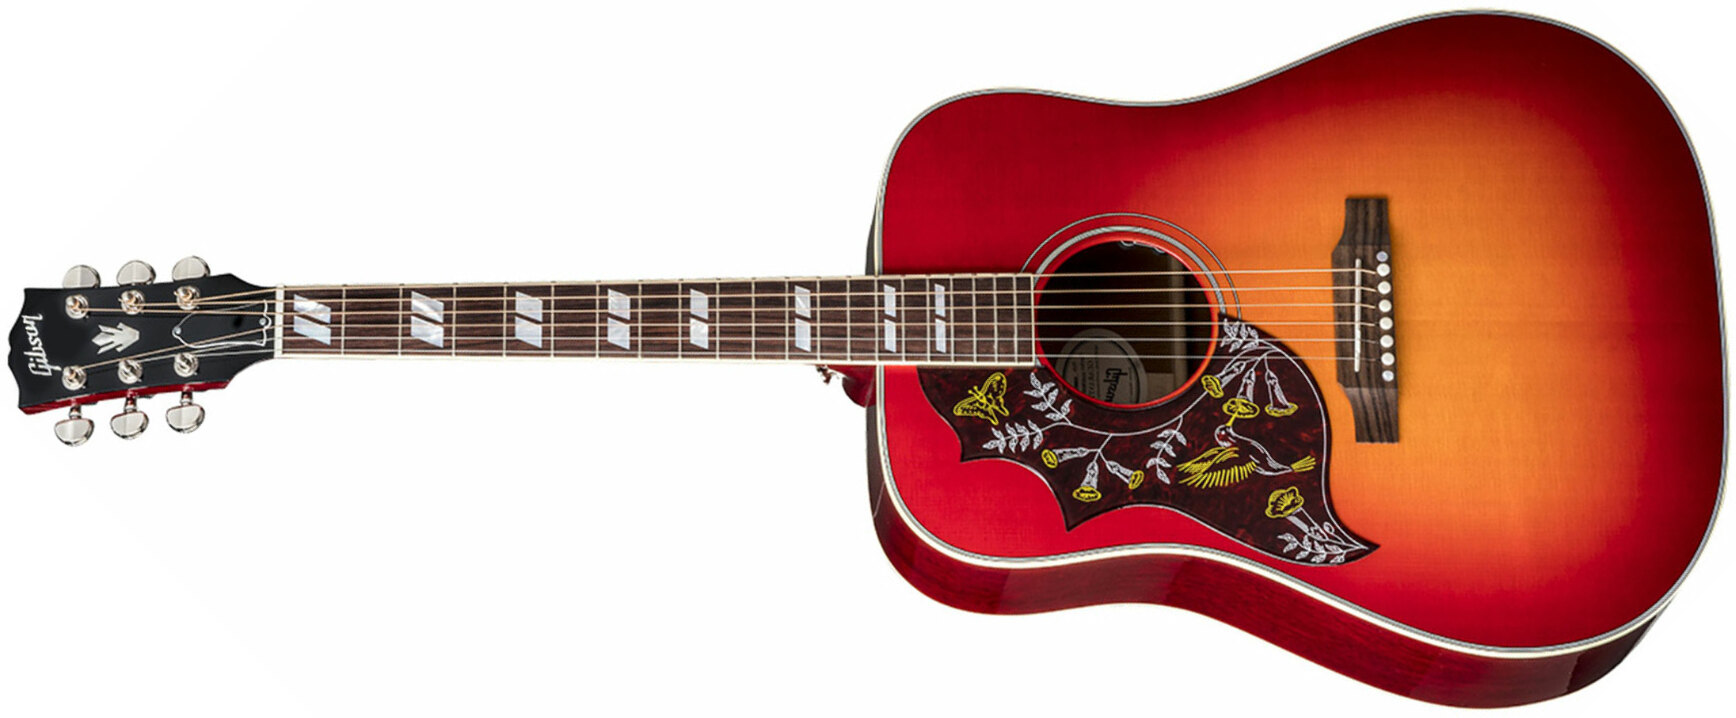 Gibson Hummingbird 2019 Lh Gaucher Dreadnought Epicea Acajou Rw - Vintage Cherry Sunburst - Electro acoustic guitar - Main picture